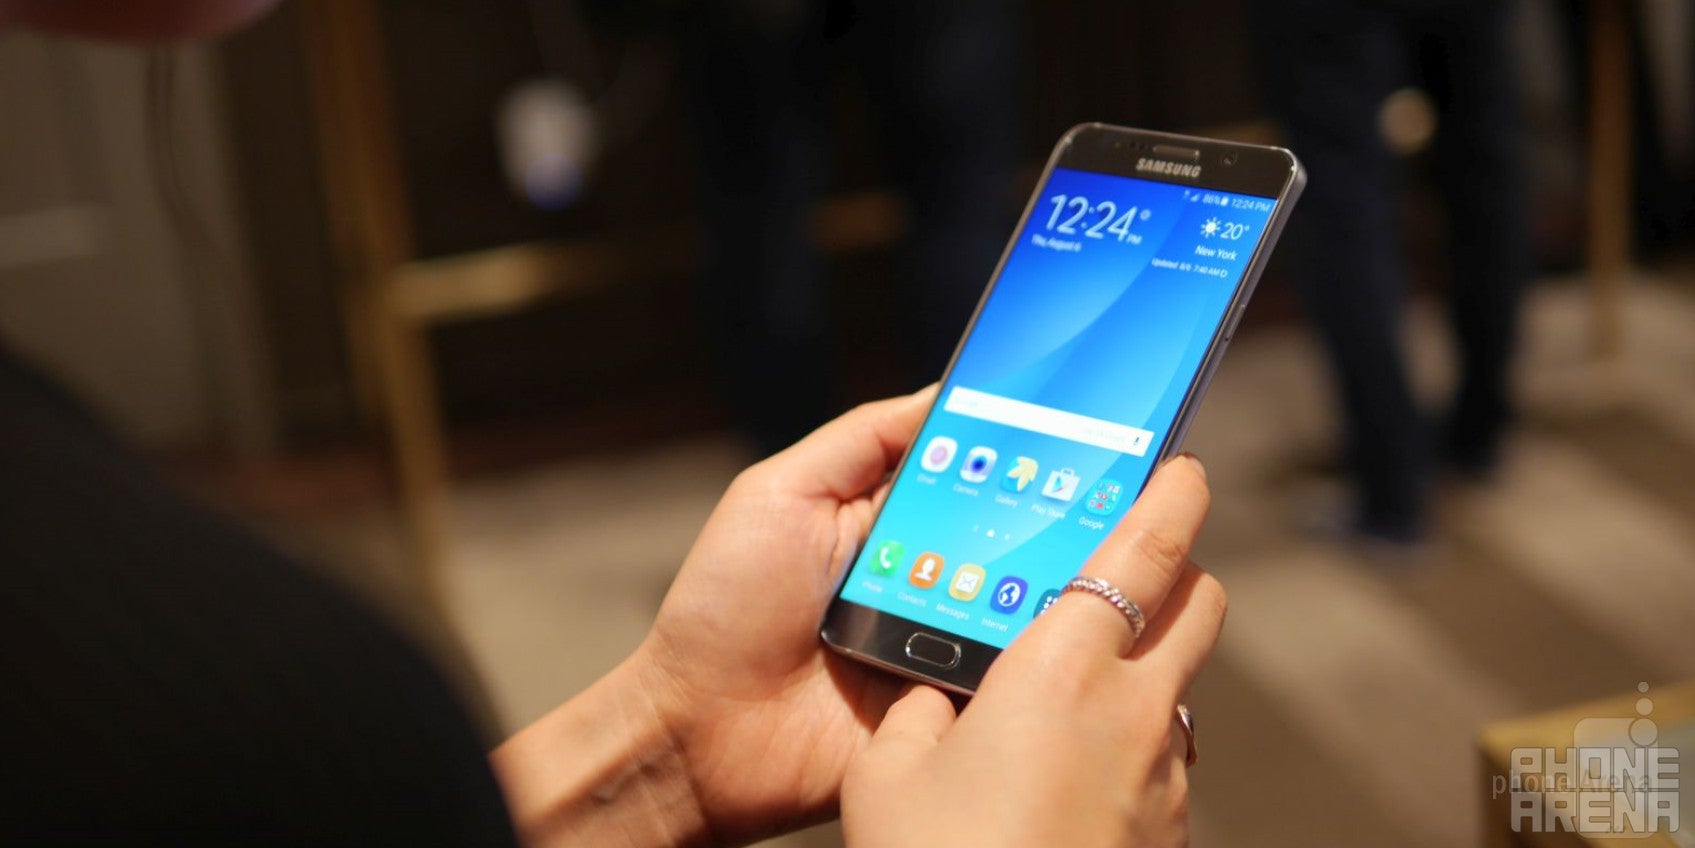 Samsung Galaxy Note5 hands-on